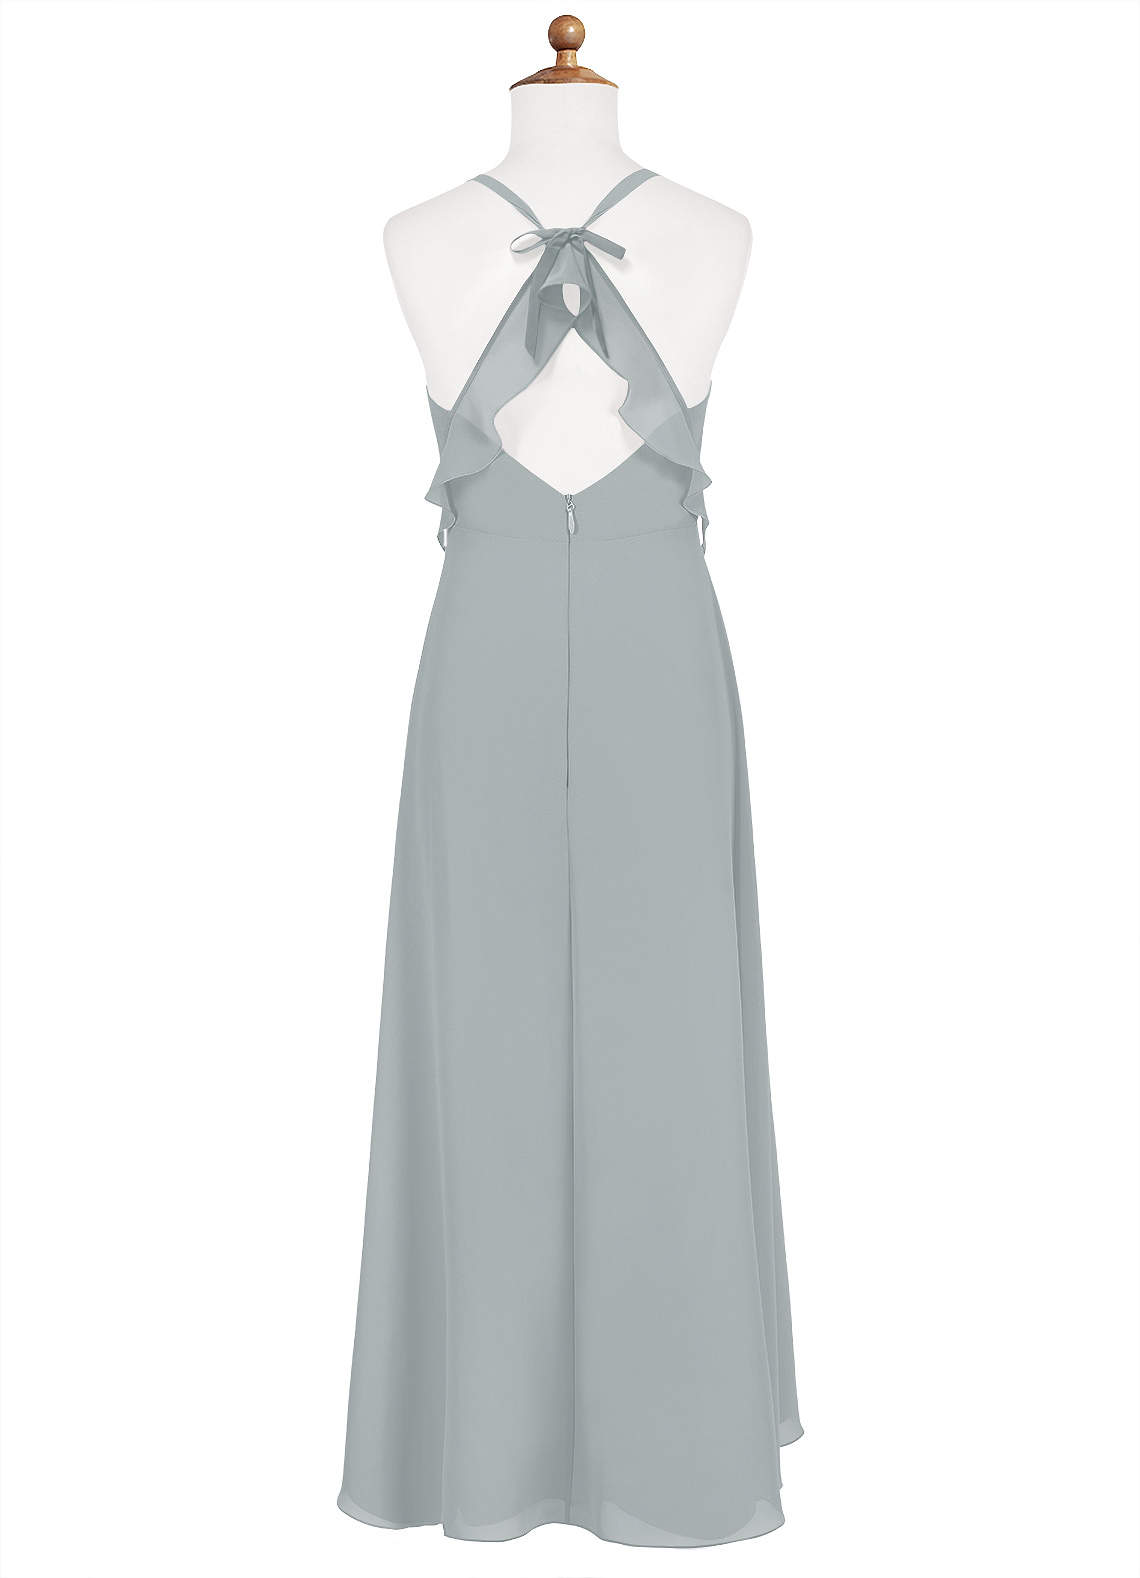 Azazie Paisley A-Line Ruched Chiffon Floor-Length Junior Bridesmaid Dress image1